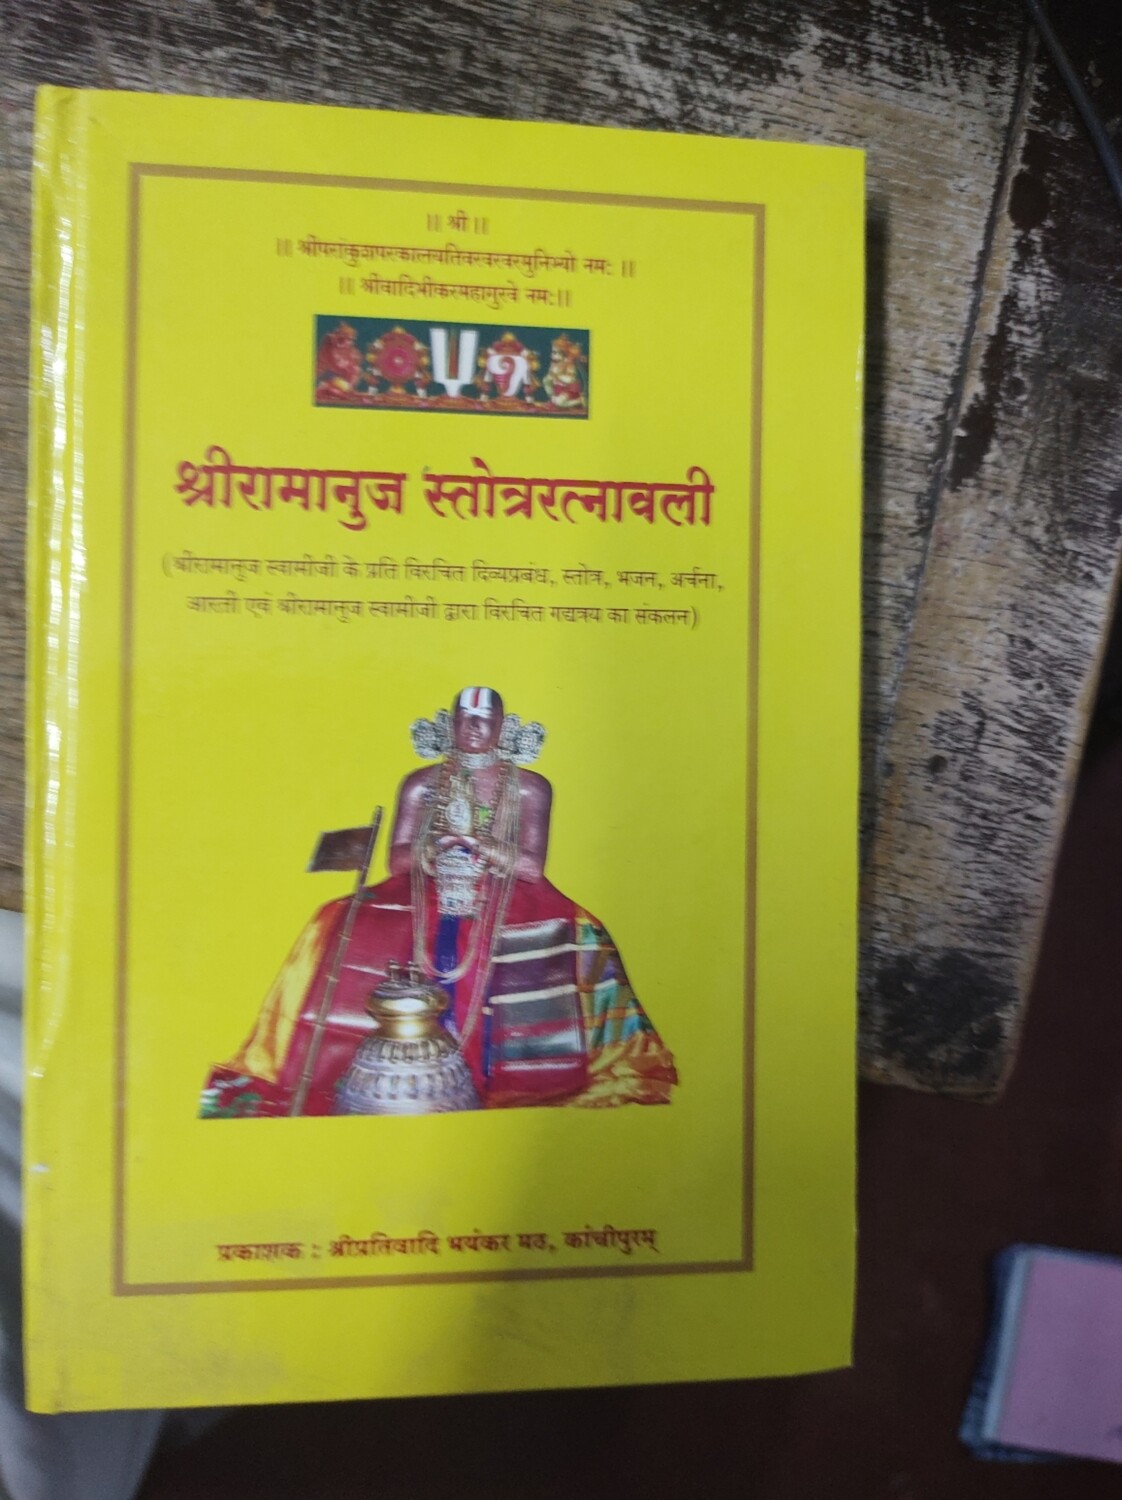 Shri / Shree Ramanuja Stotra Ratnavali, Hindi